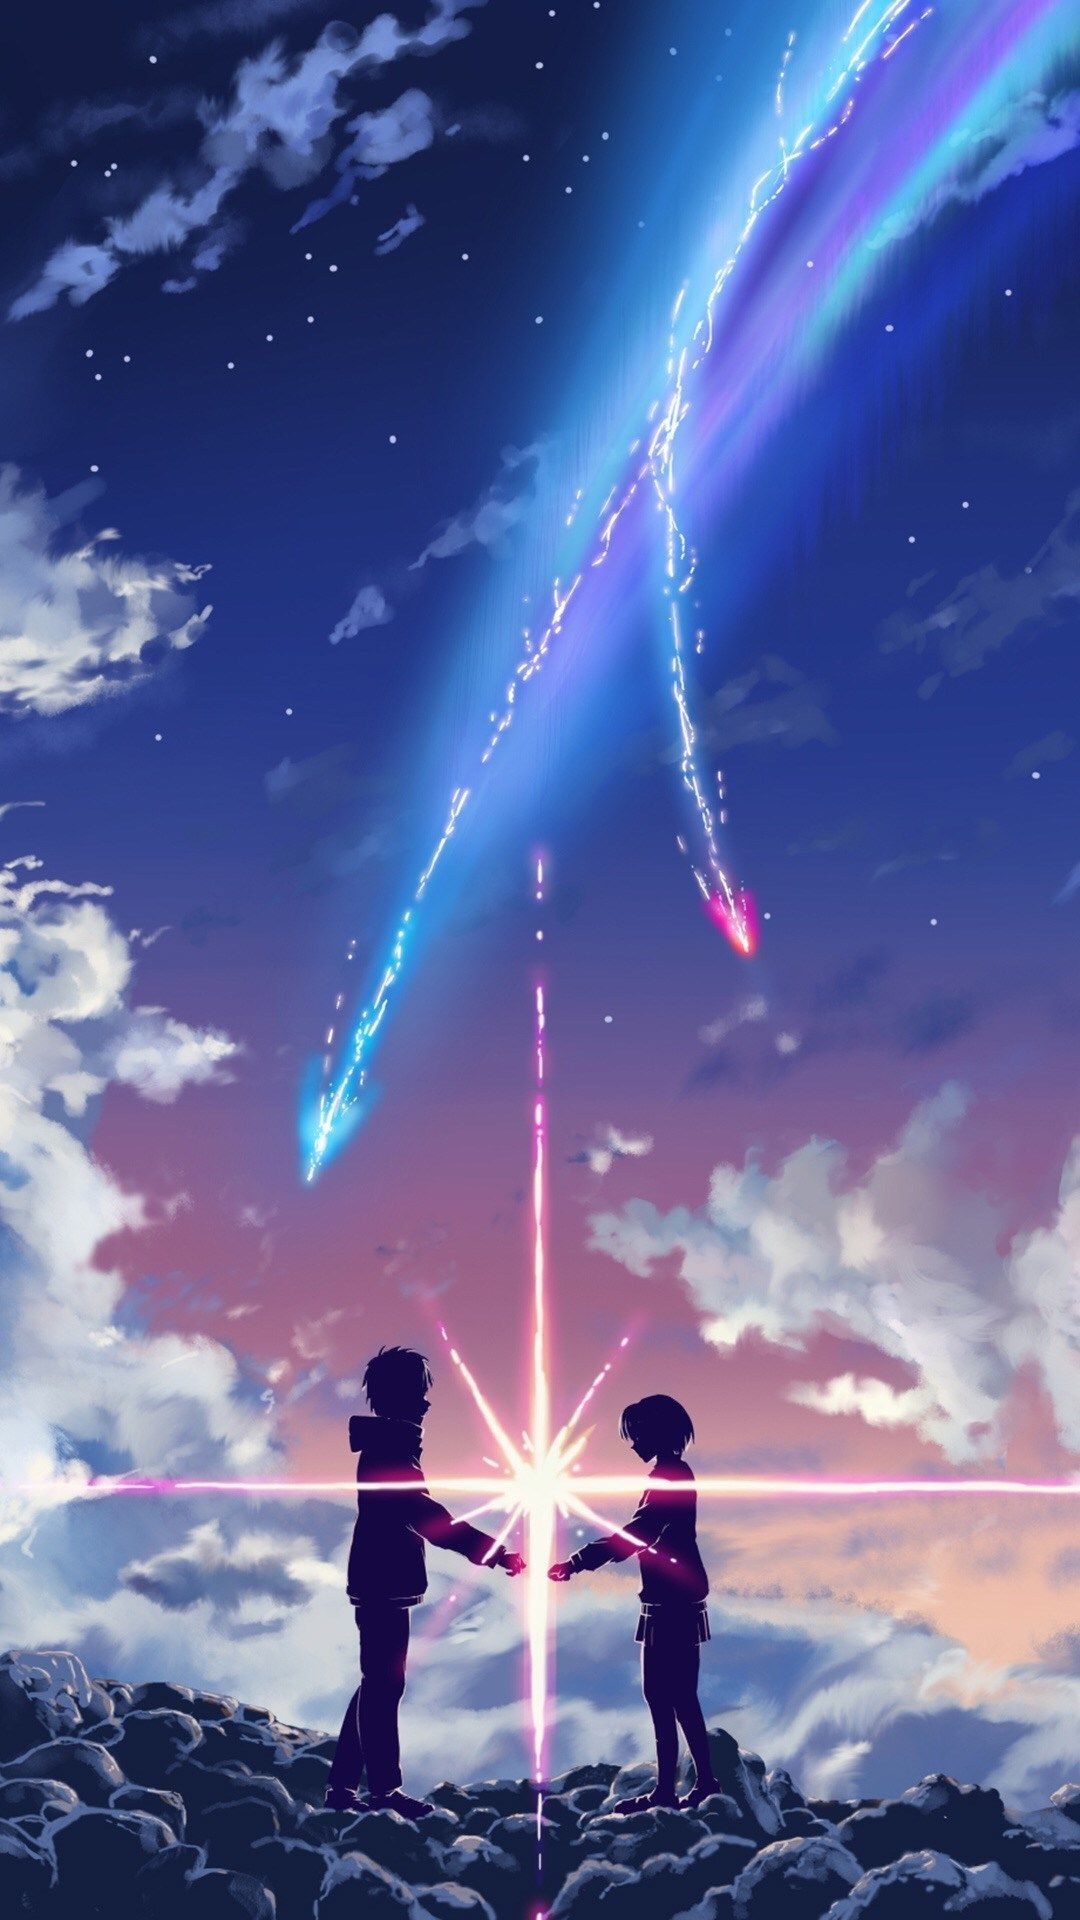 900+ Anime Background Images: Download HD Backgrounds on Unsplash